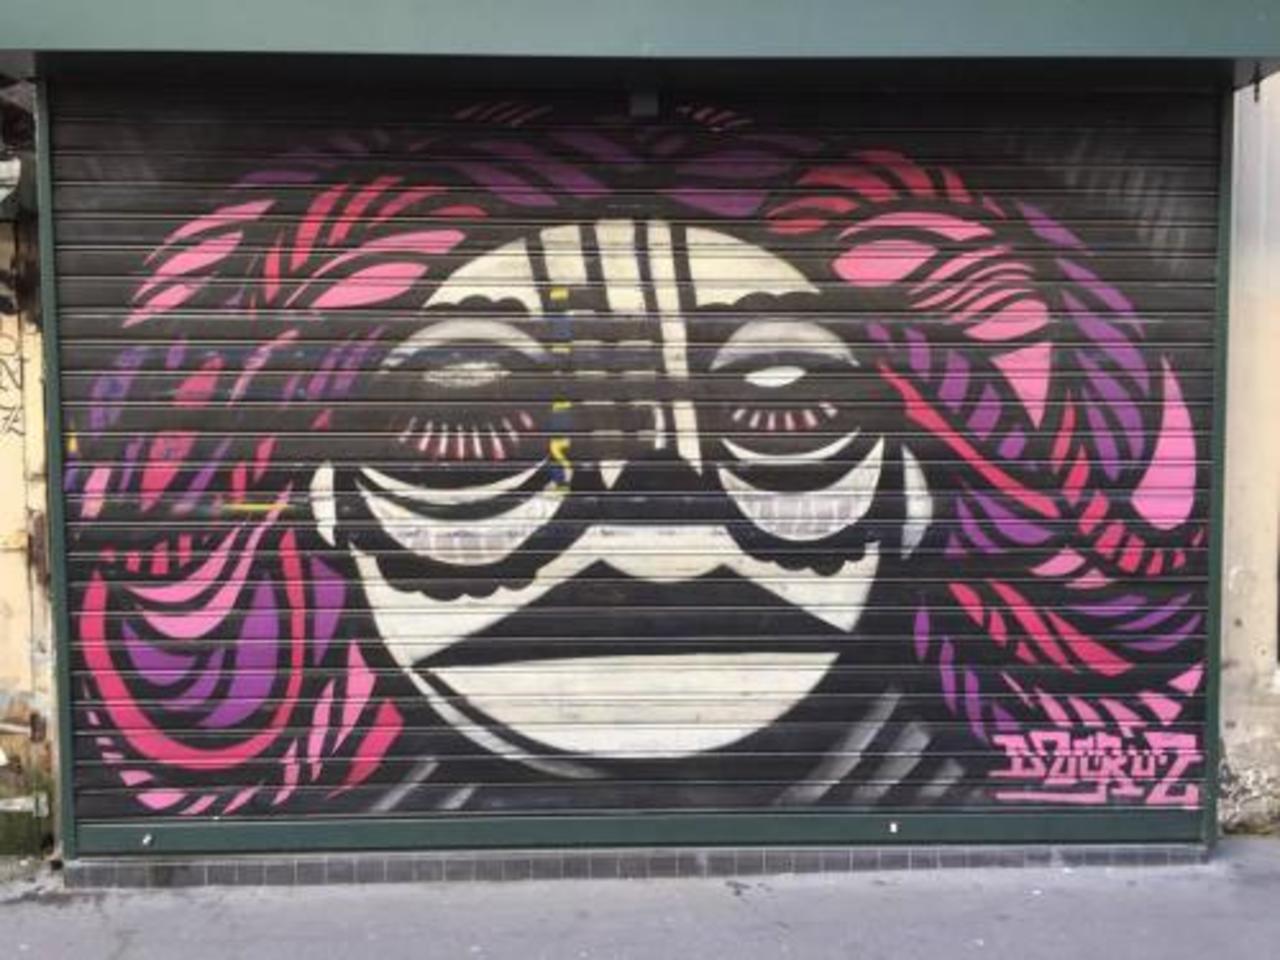 escargot_esco

#streetart #street #art #paris #graffiti… http://streetiam1.tumblr.com/post/130097234766 http://t.co/2XrGsTsrSt